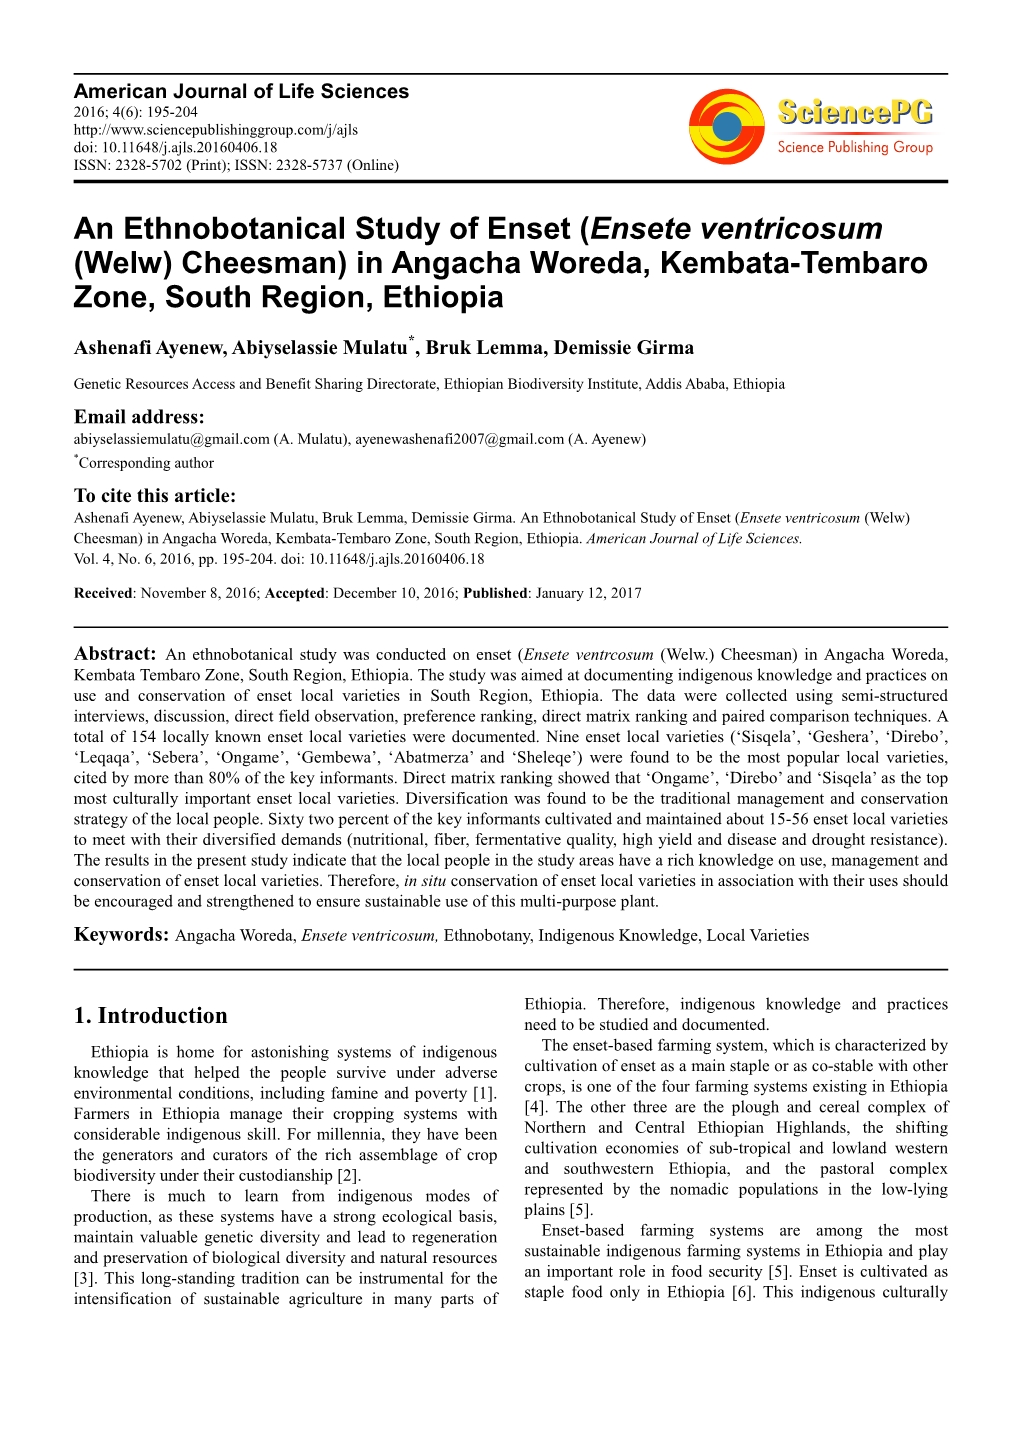 (Ensete Ventricosum (Welw) Cheesman) in Angacha Woreda, Kembata-Tembaro Zone, South Region, Ethiopia